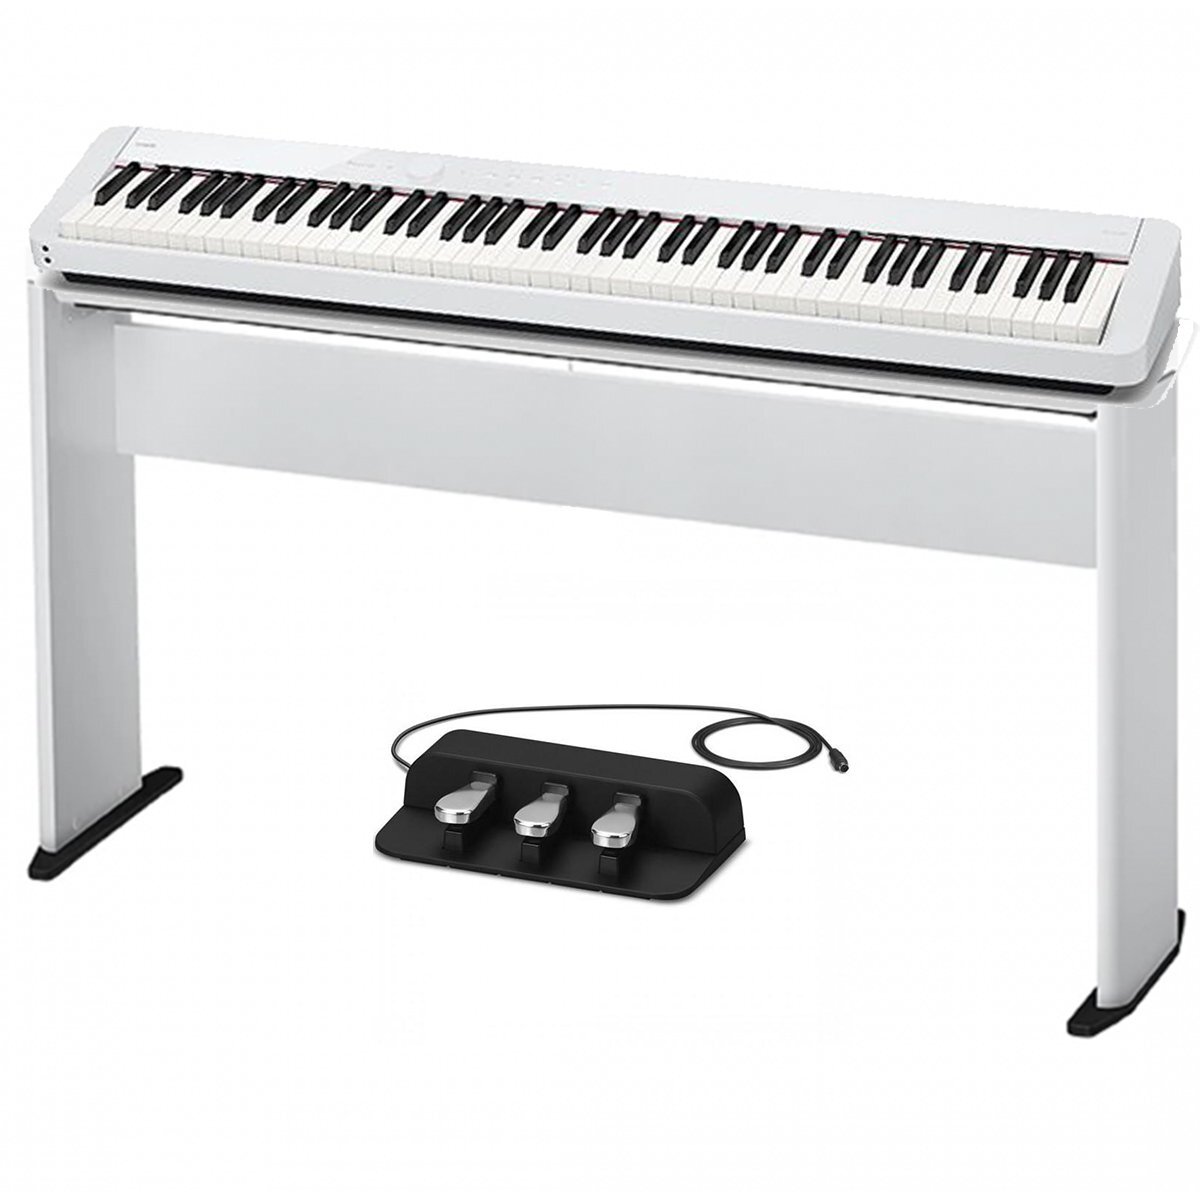 Casio Privia PX-S1100 Digital Piano White w/ CS68P Stand & SP34